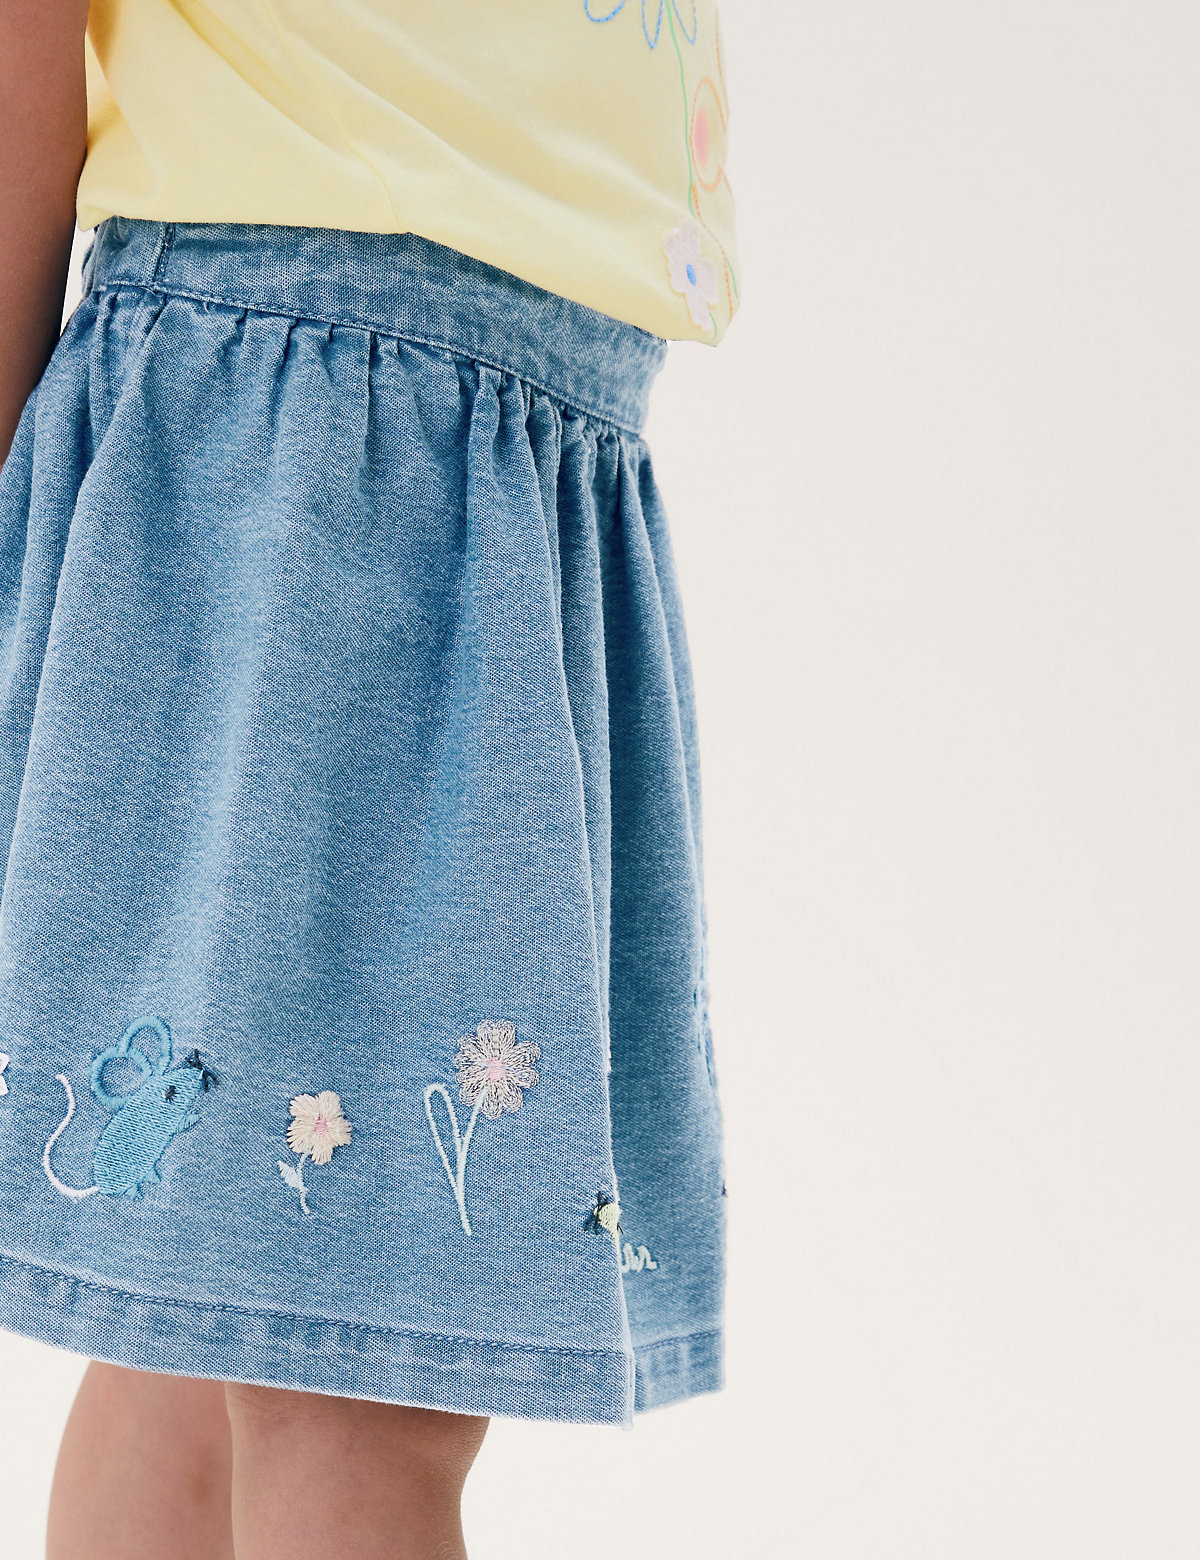 MINI BODEN Tie Waist Embroidered Skirt 9-10 Years Blue Denim Stars NEW SAMPLE 